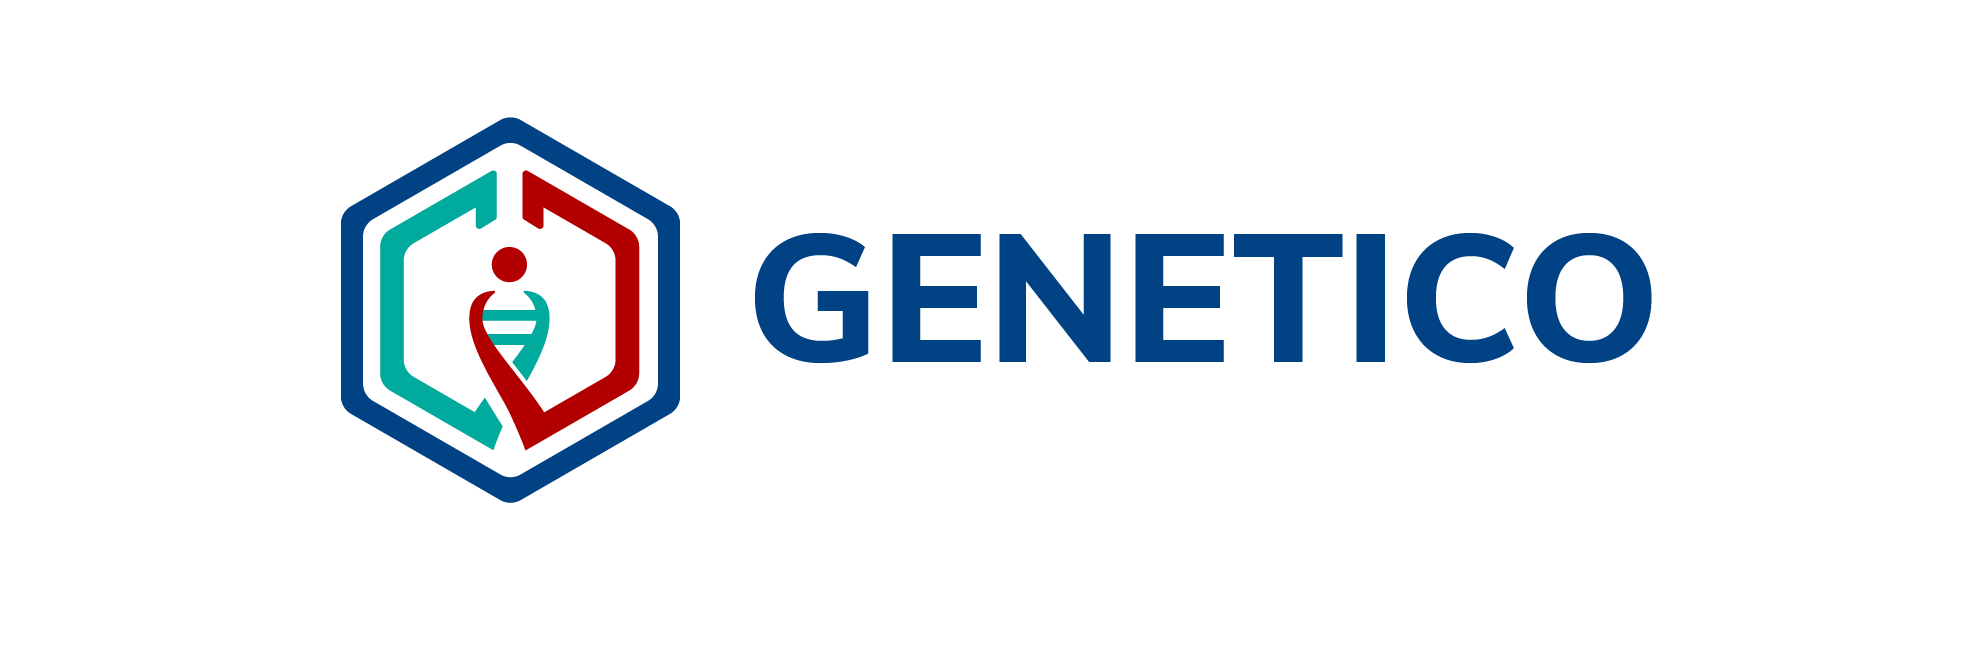 Genetico Research & Diagnostics Pvt. Ltd